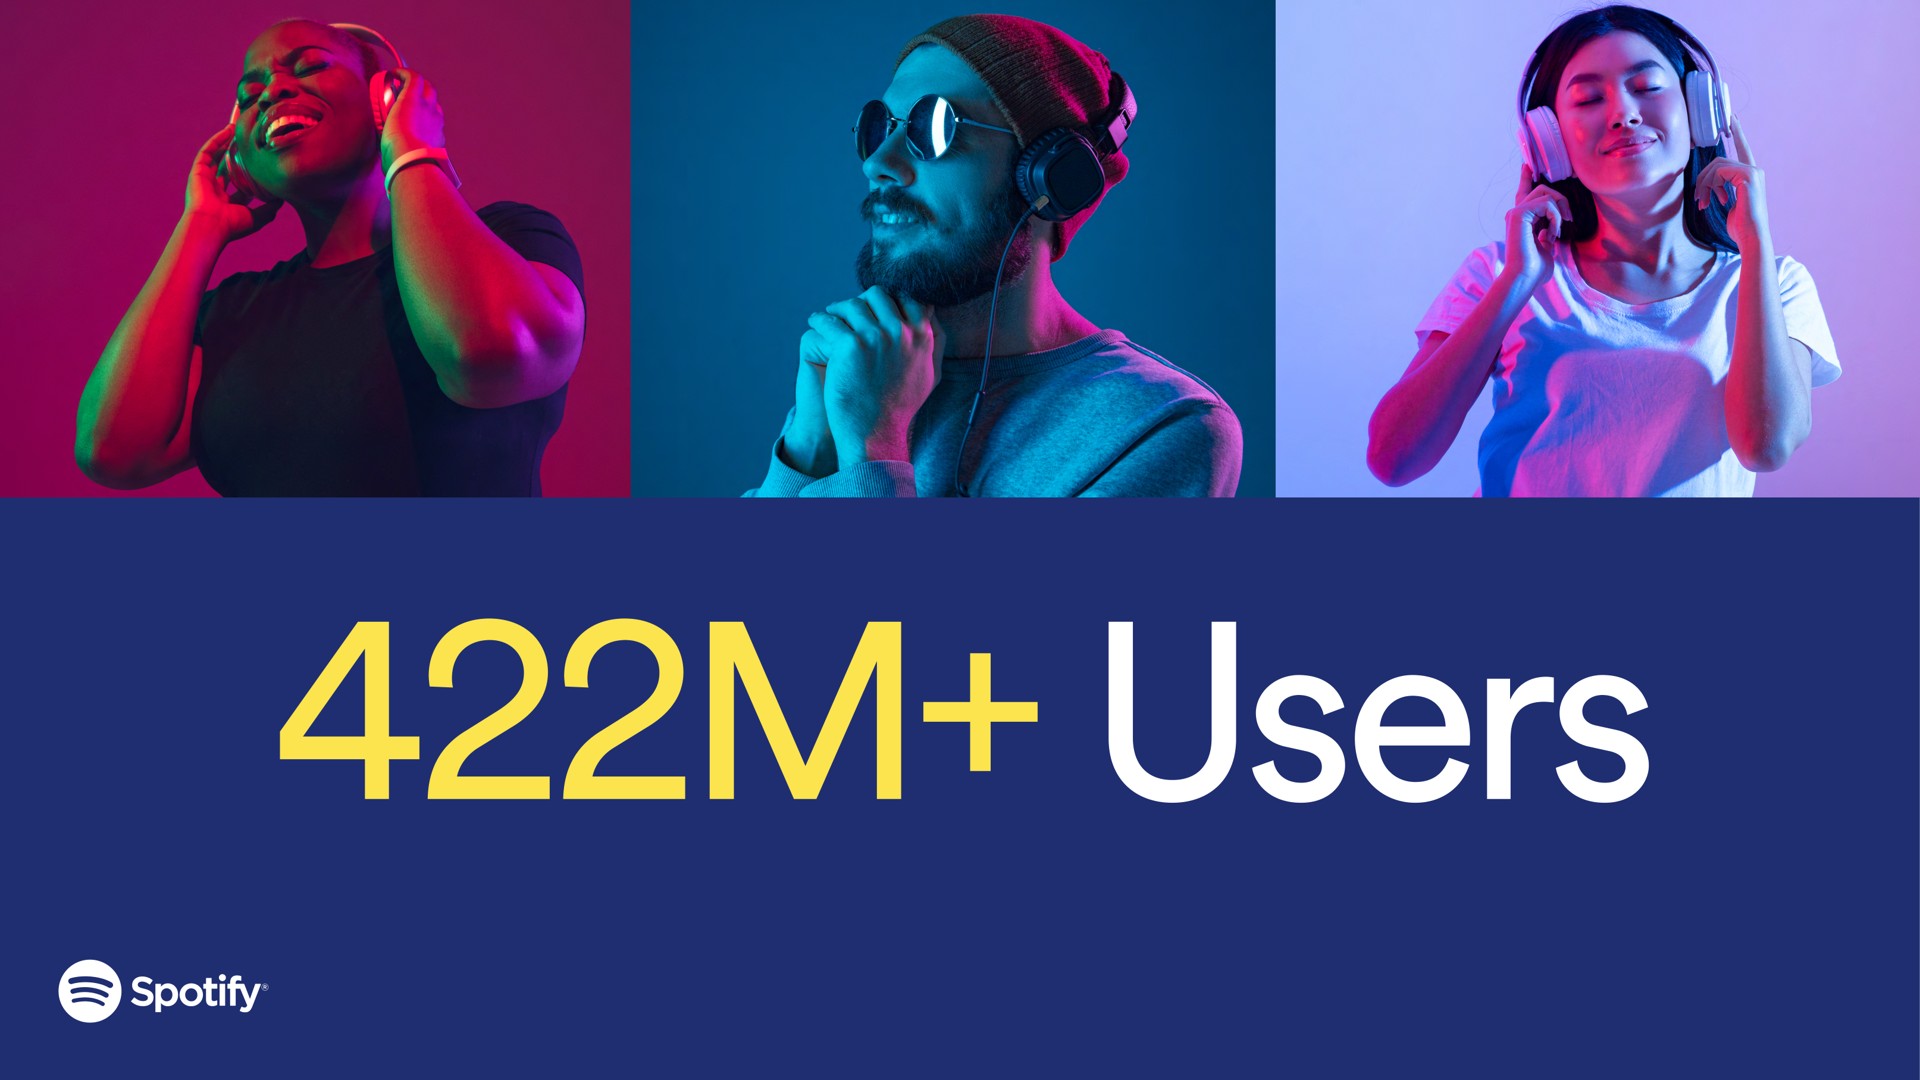 users | Spotify